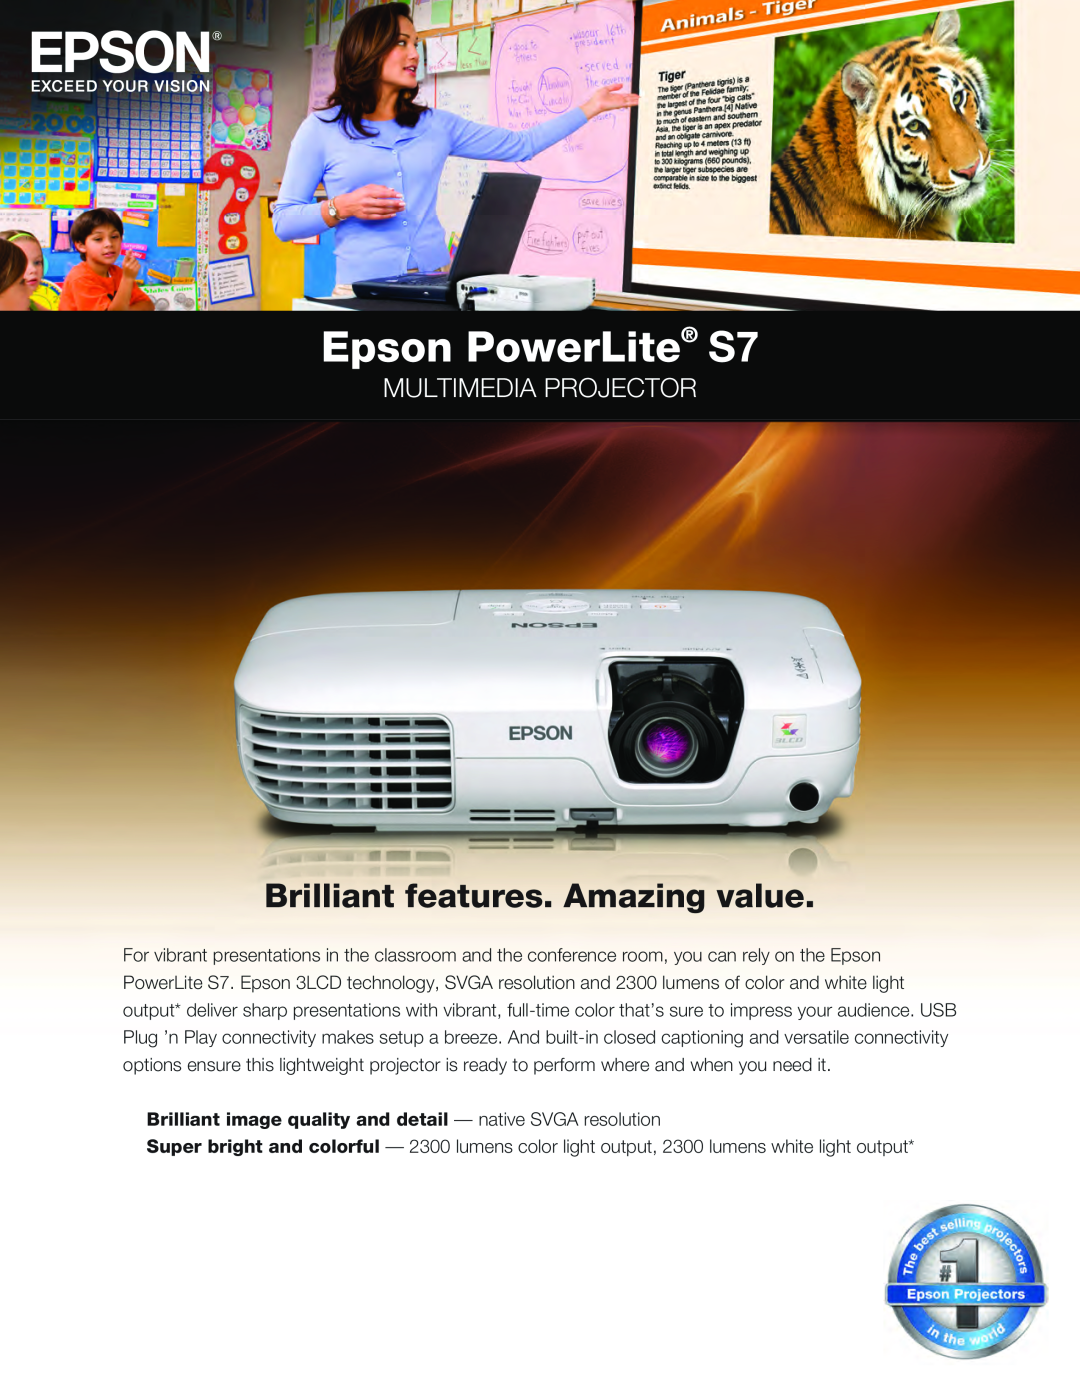 Epson specifications Epson PowerLite S7, Brilliant features. Amazing value, Multimedia Projector 